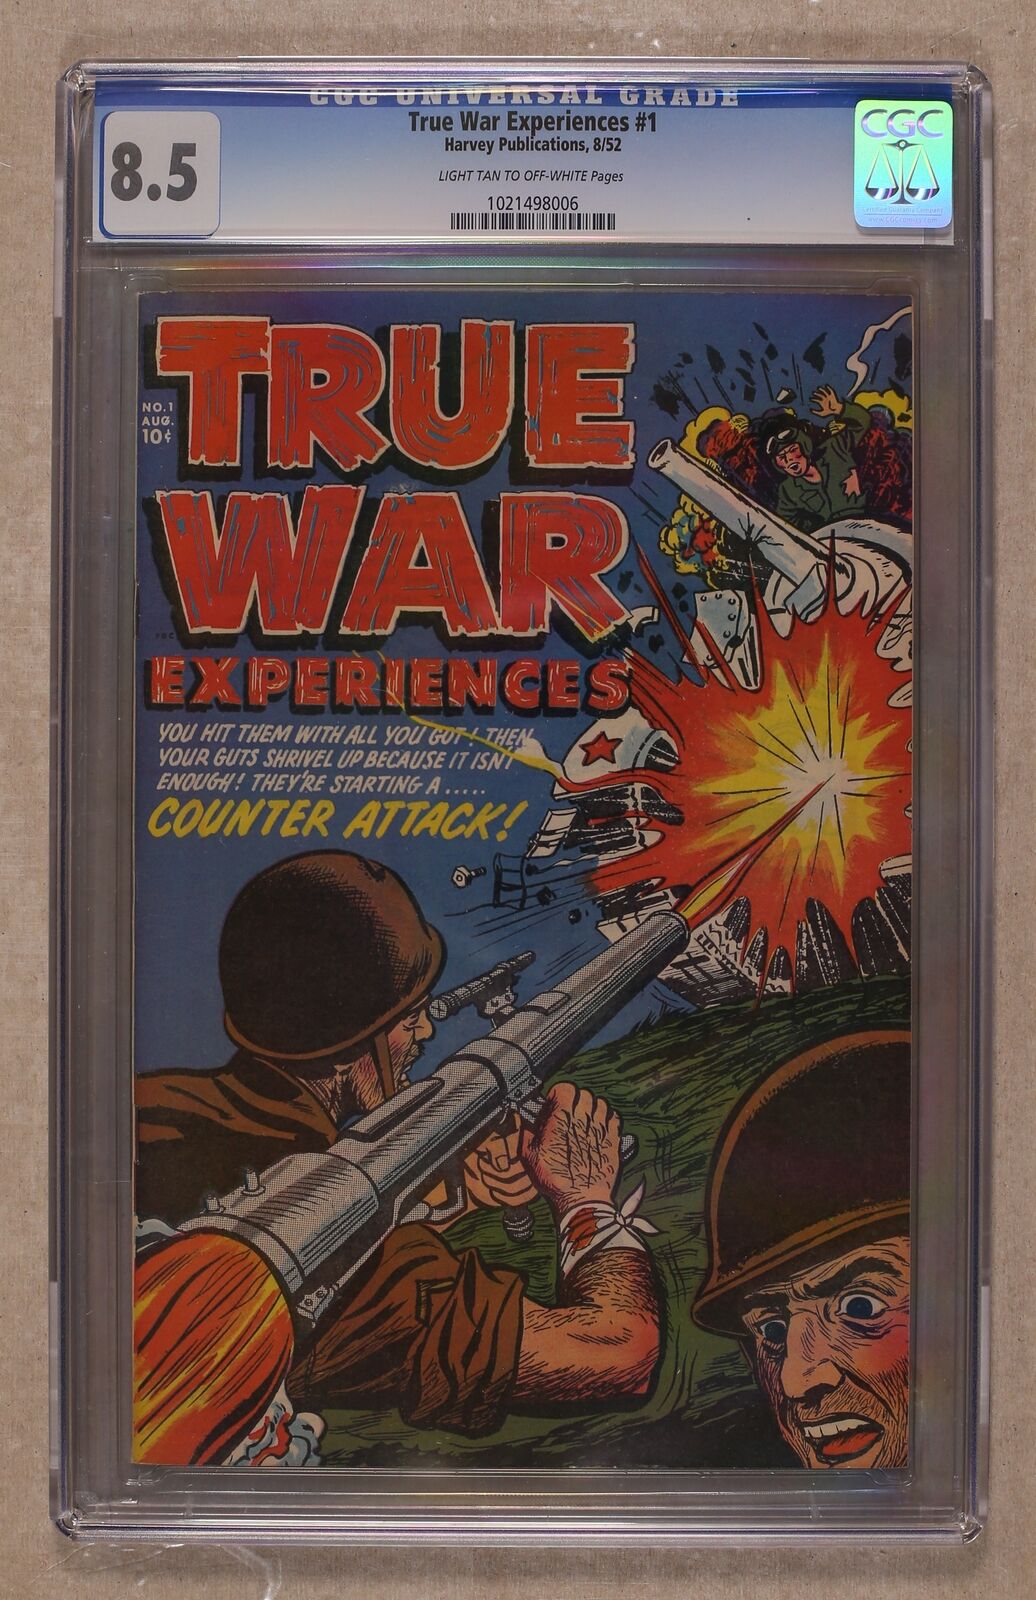 True War Experiences #1 CGC 8.5 1952 1021498006